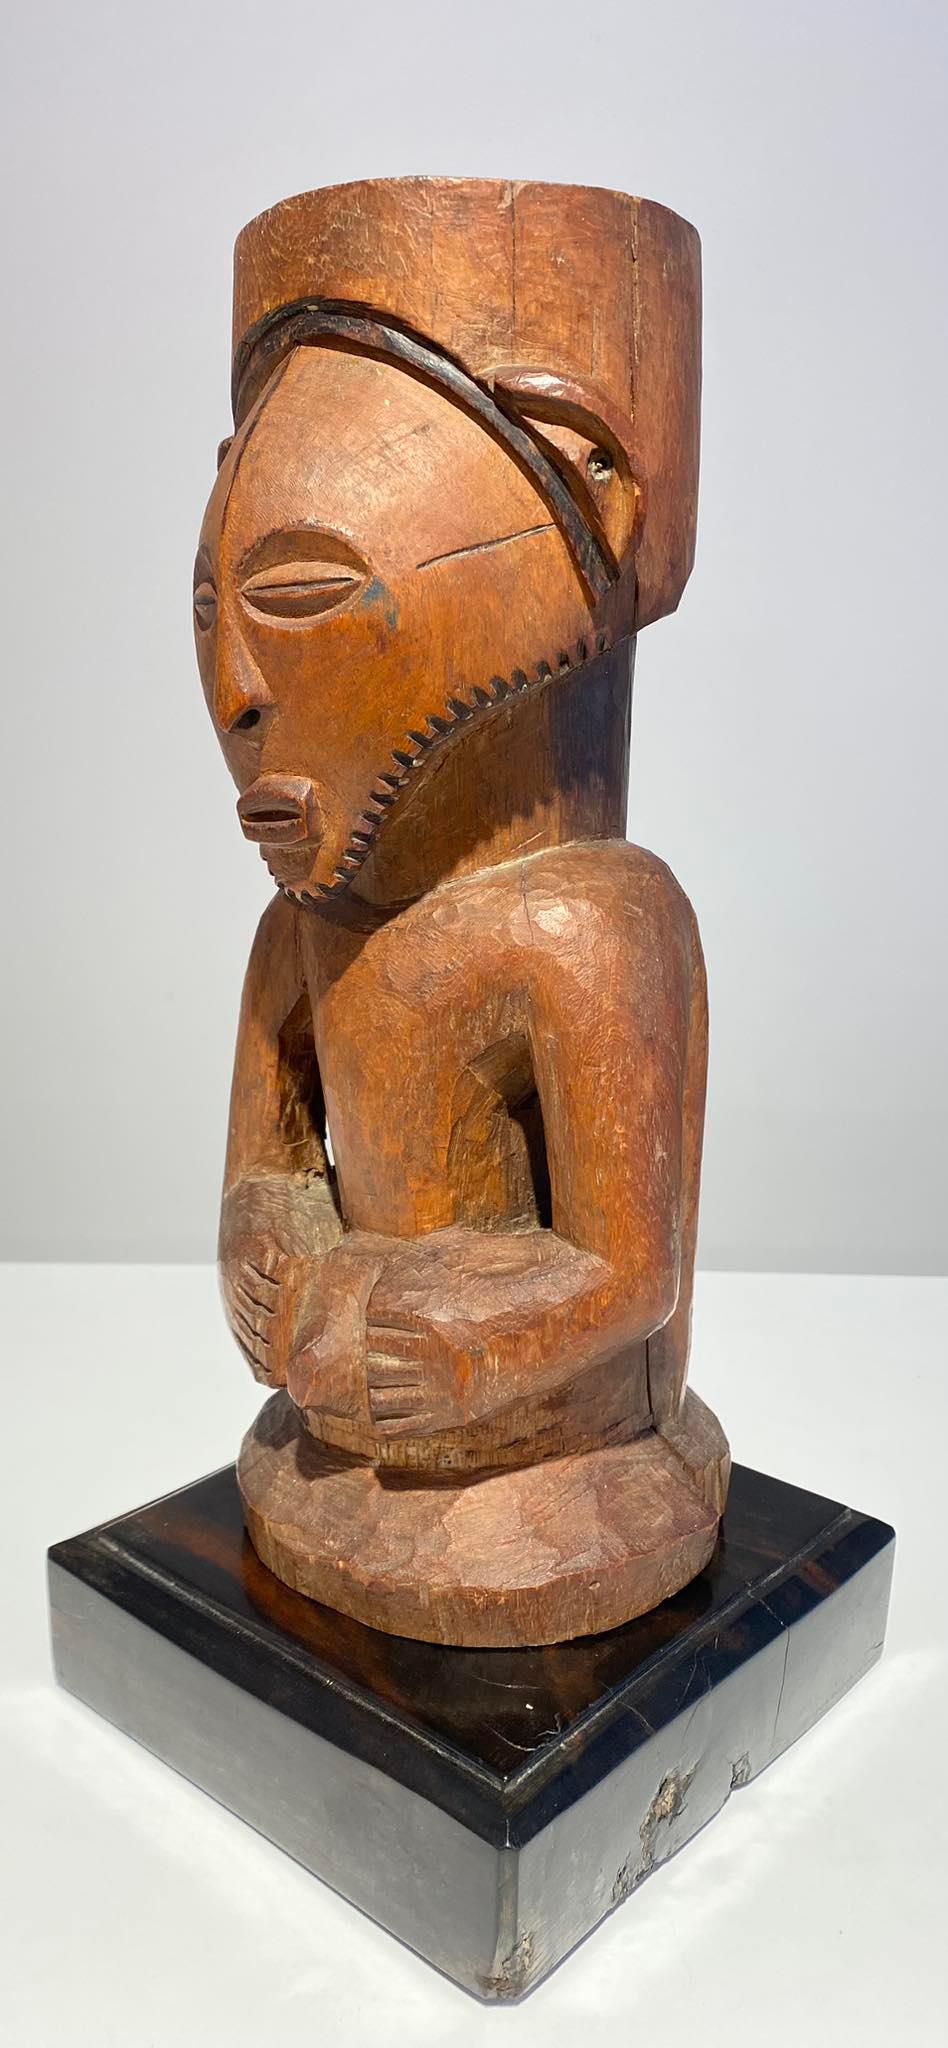 Kusu wooden ancestor fetish ca 1900 DR Congo Africa Central African Tribal Art For Sale 5